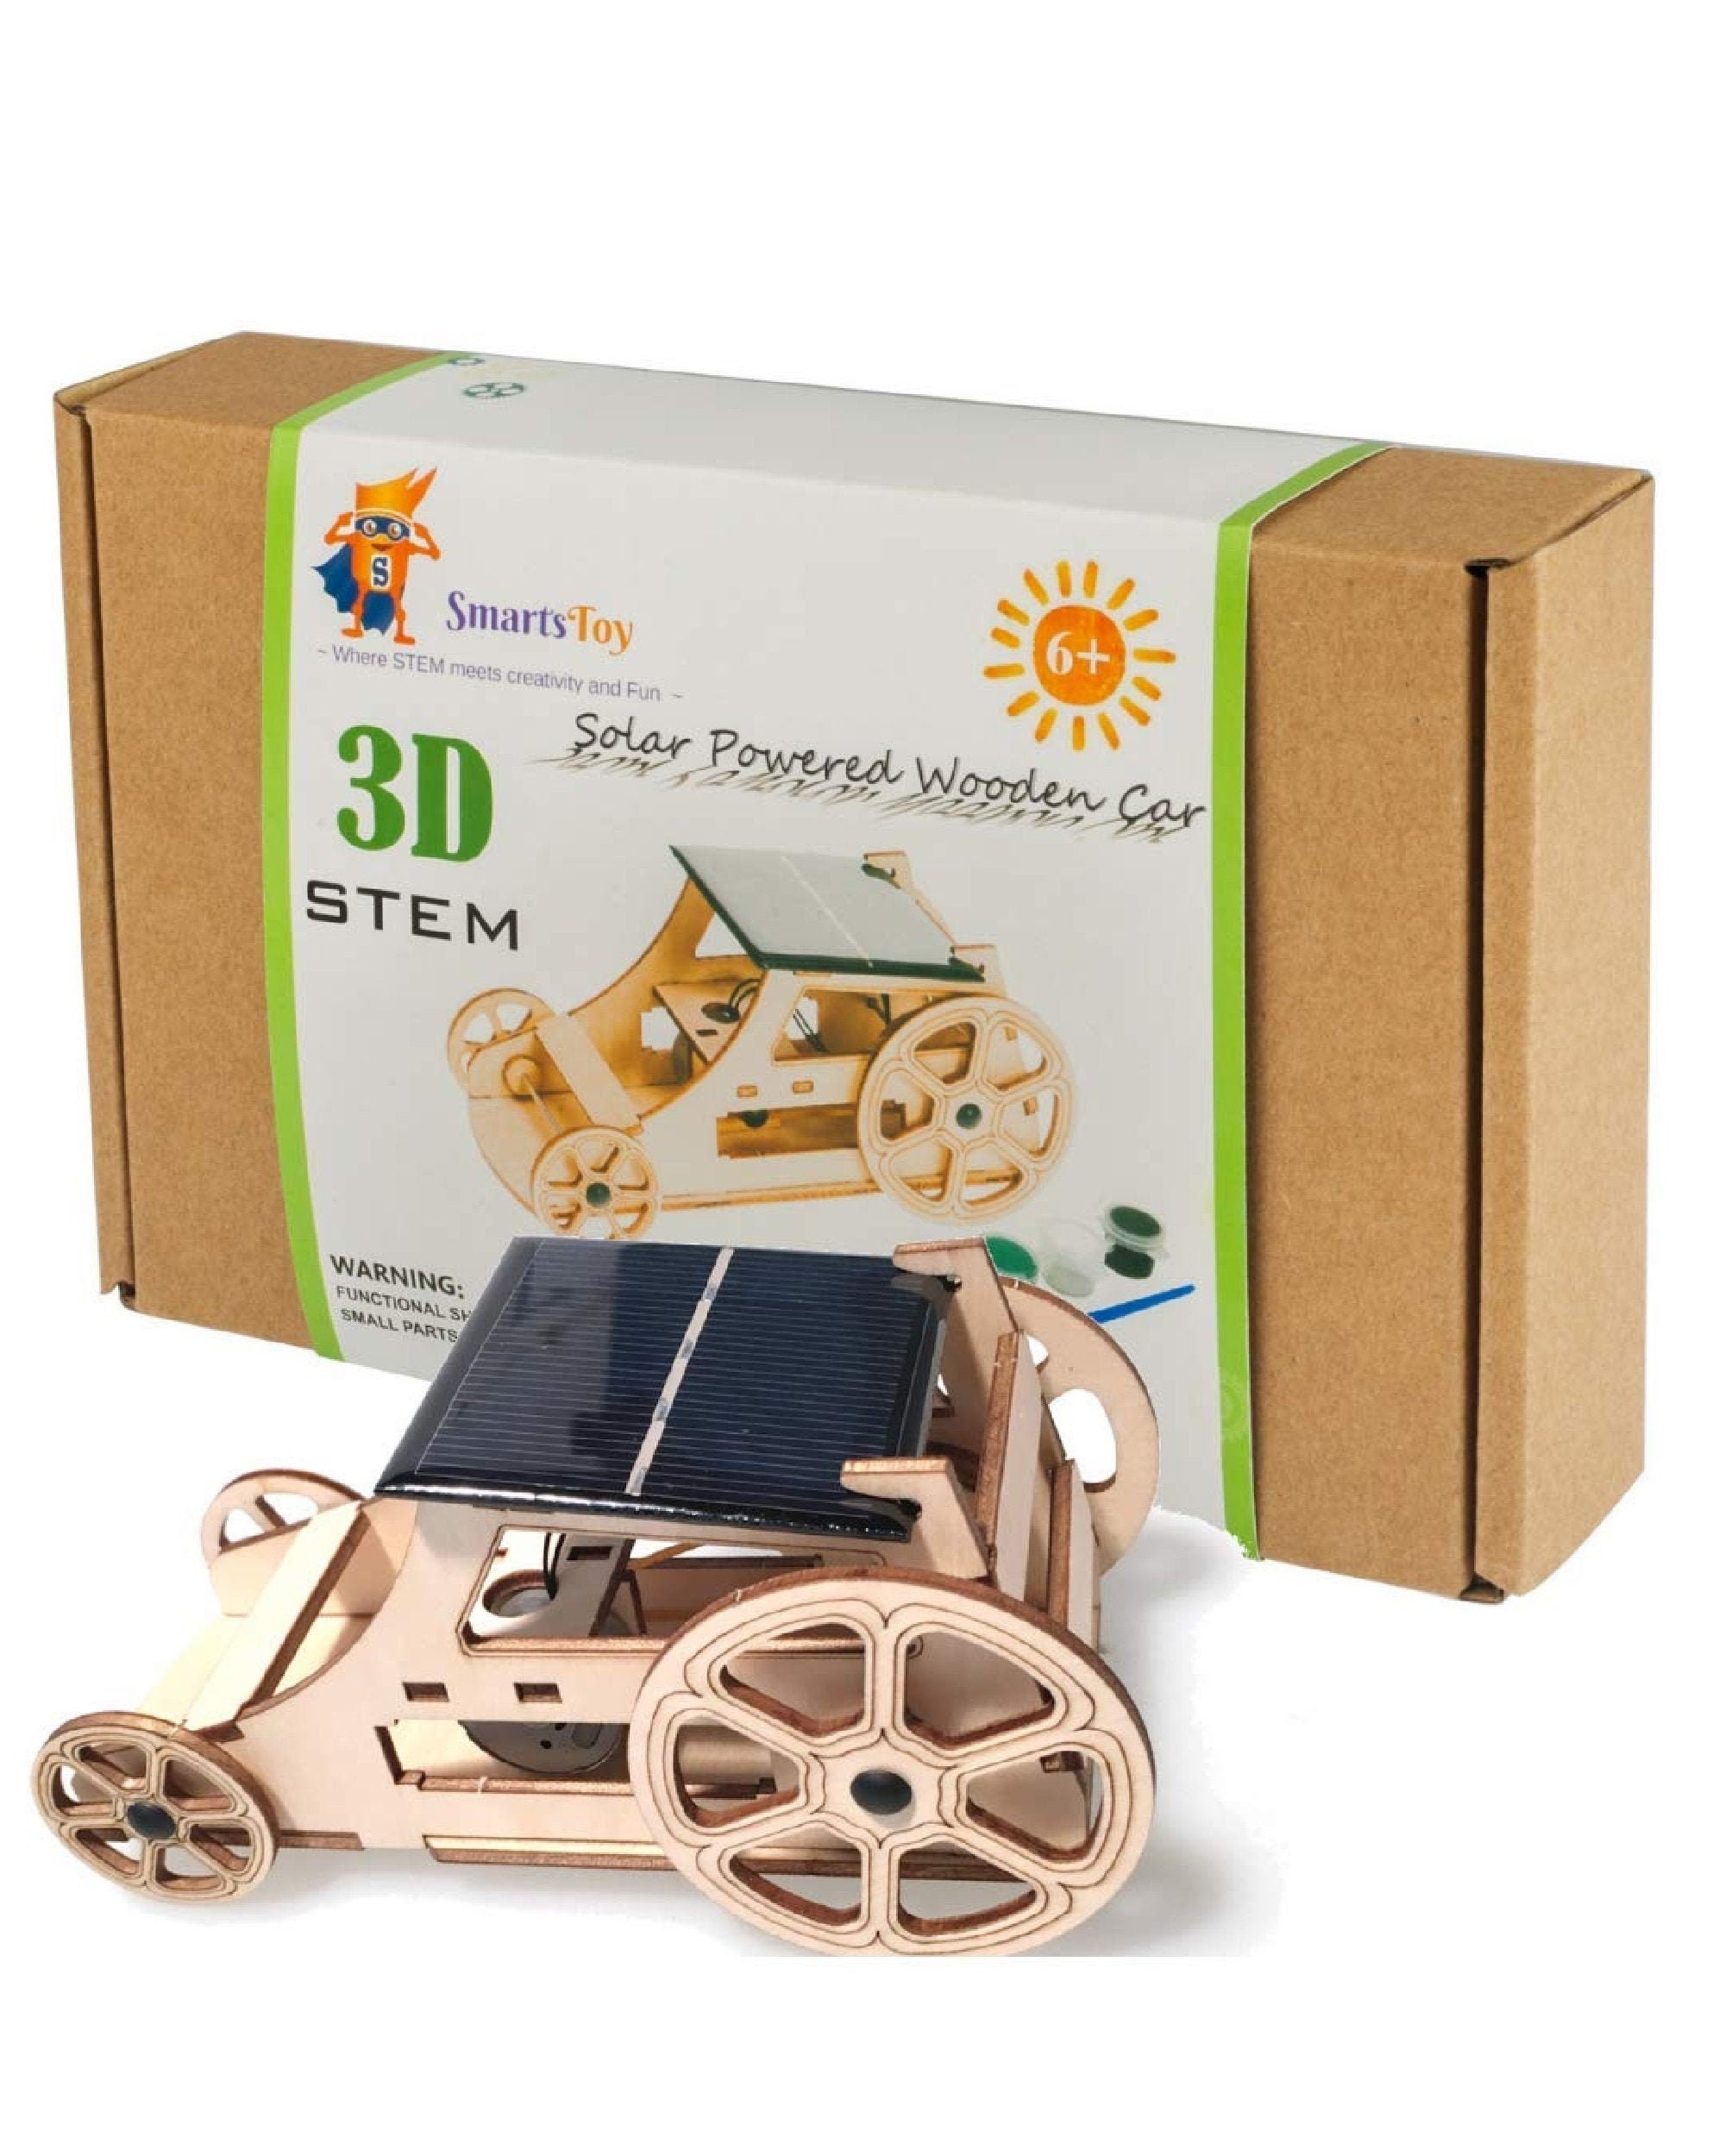 6 in 1 STEM Building Kits for Kids, Wooden Car Model Kit for Boys to Build,  DIY